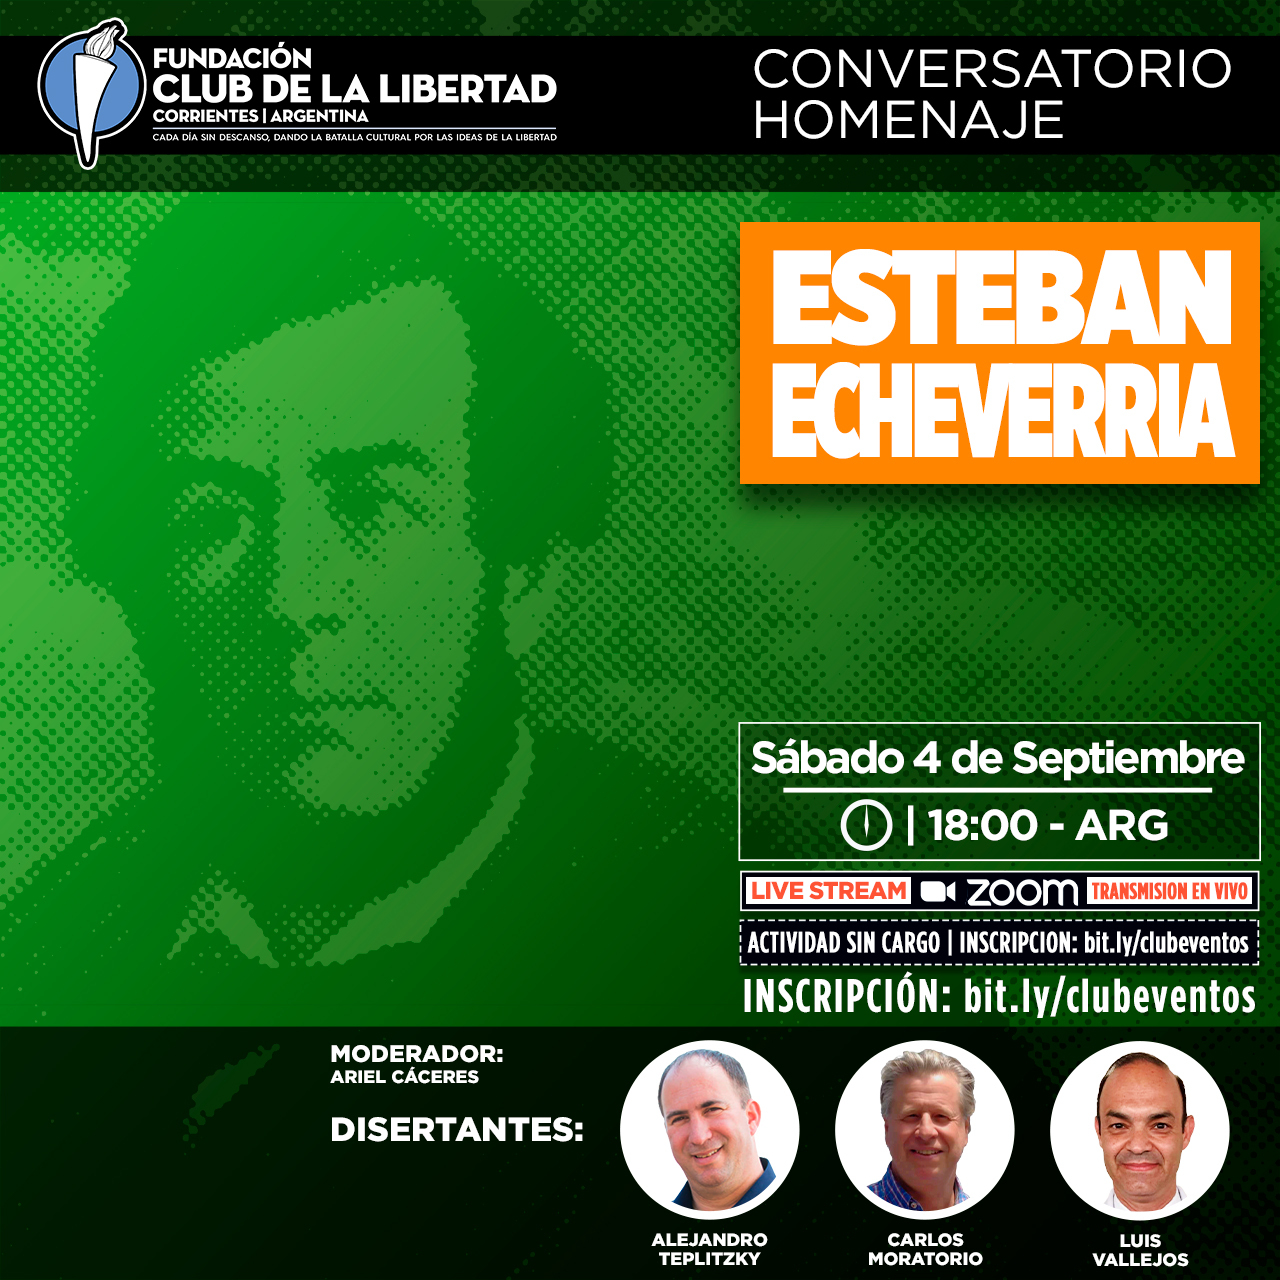 En este momento estás viendo Conversatorio homenaje: Esteban Echeverria